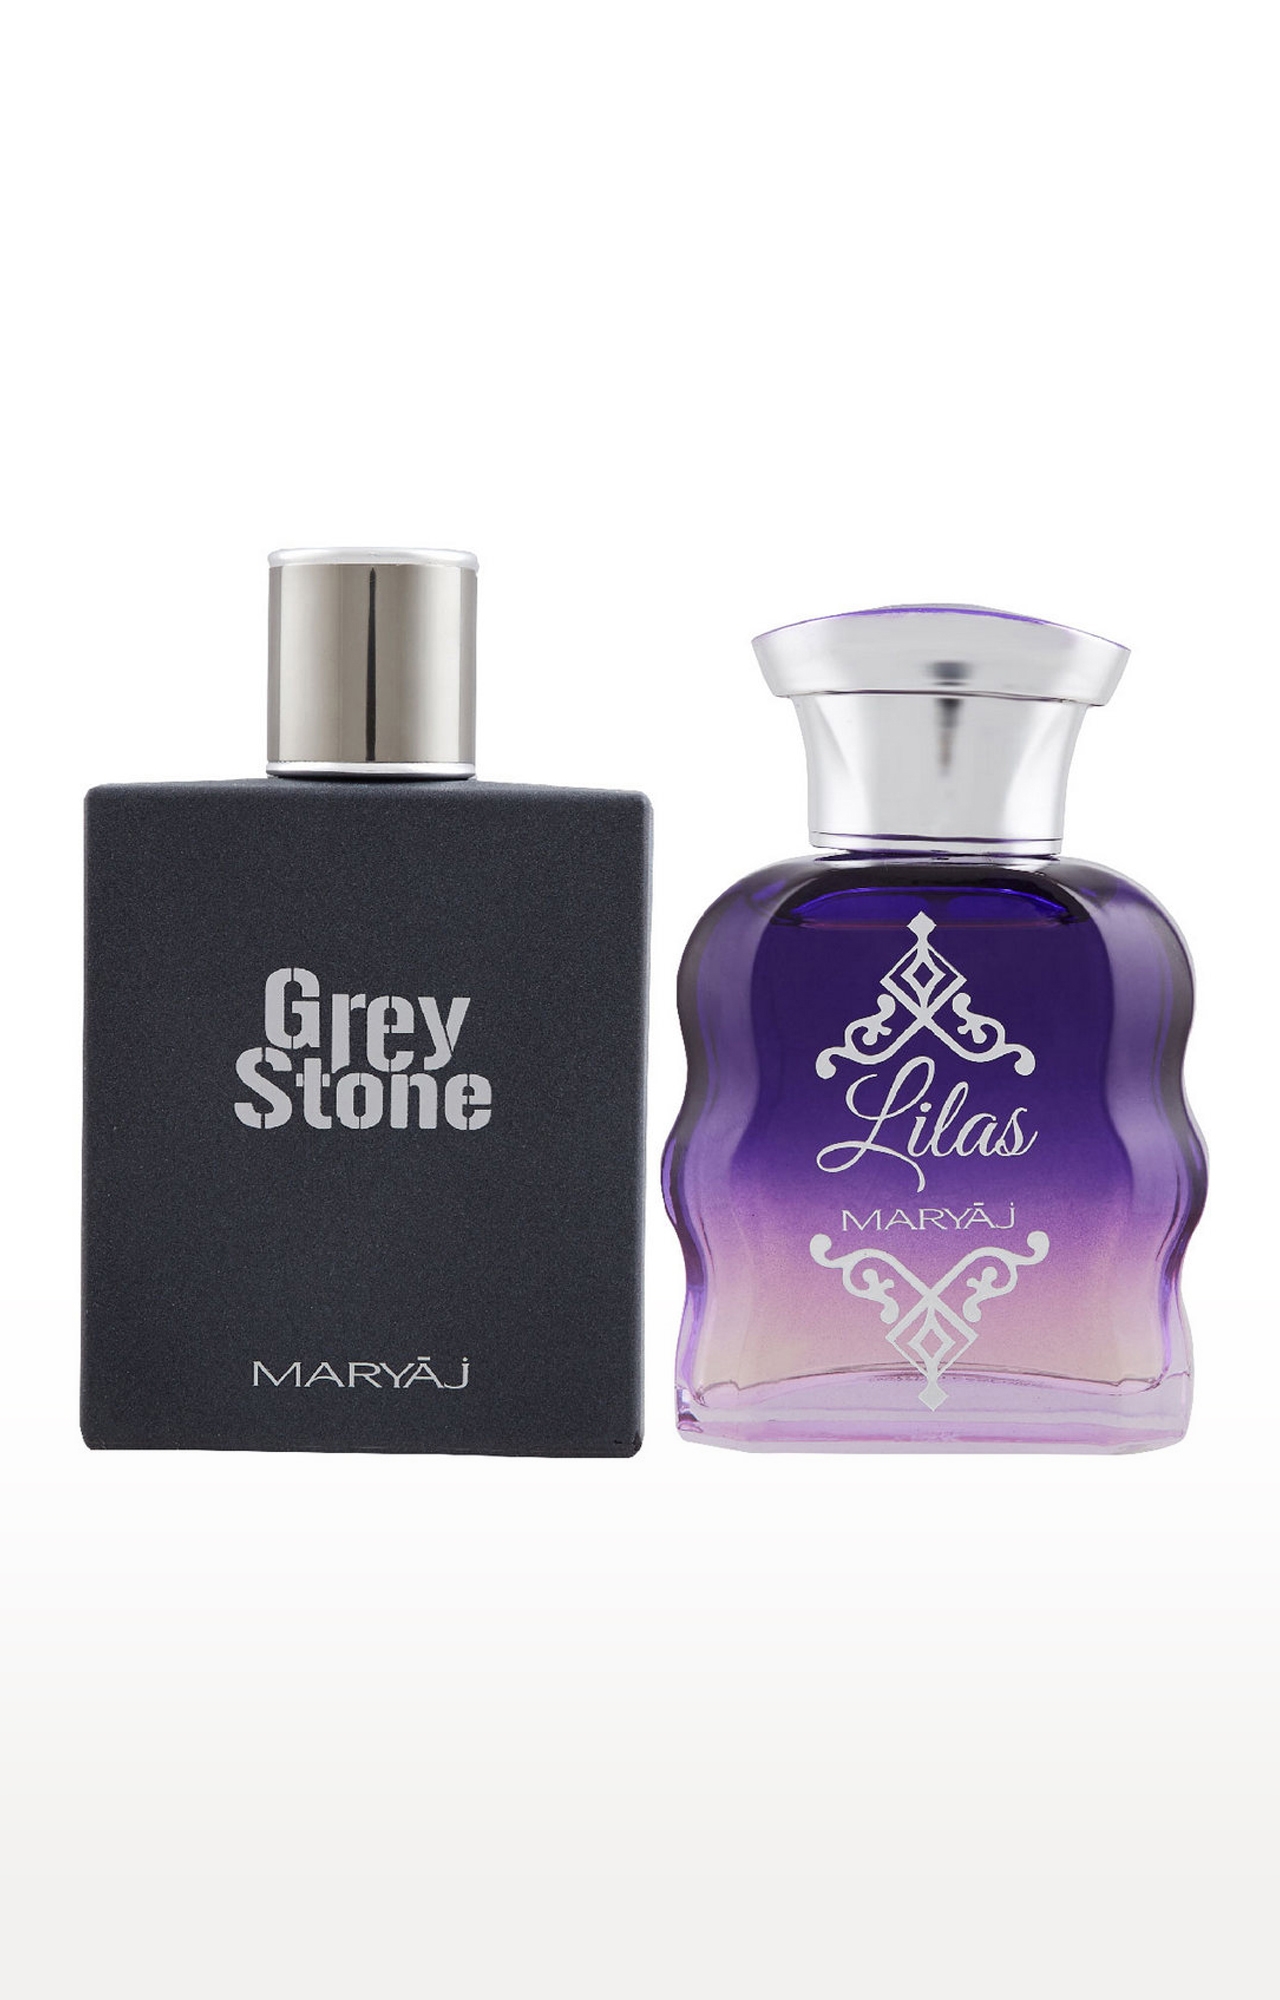 Maryaj | Maryaj Grey Stone Eau De Parfum Perfume 100ml for Men and Maryaj Lilas Eau De Parfum Perfume 100ml for Women